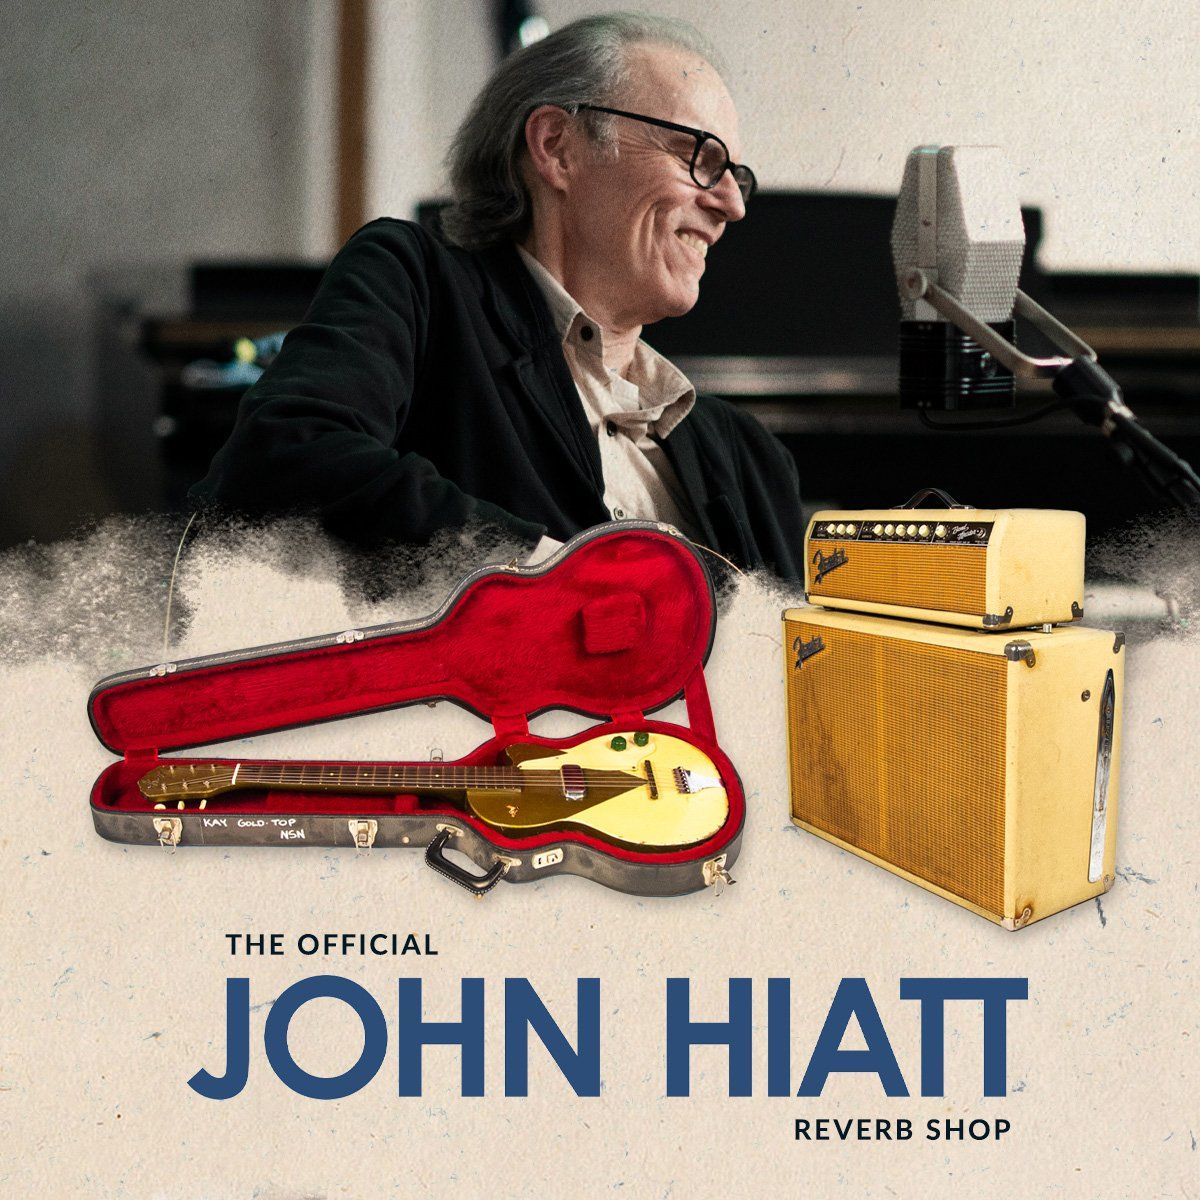 john hiatt tour history